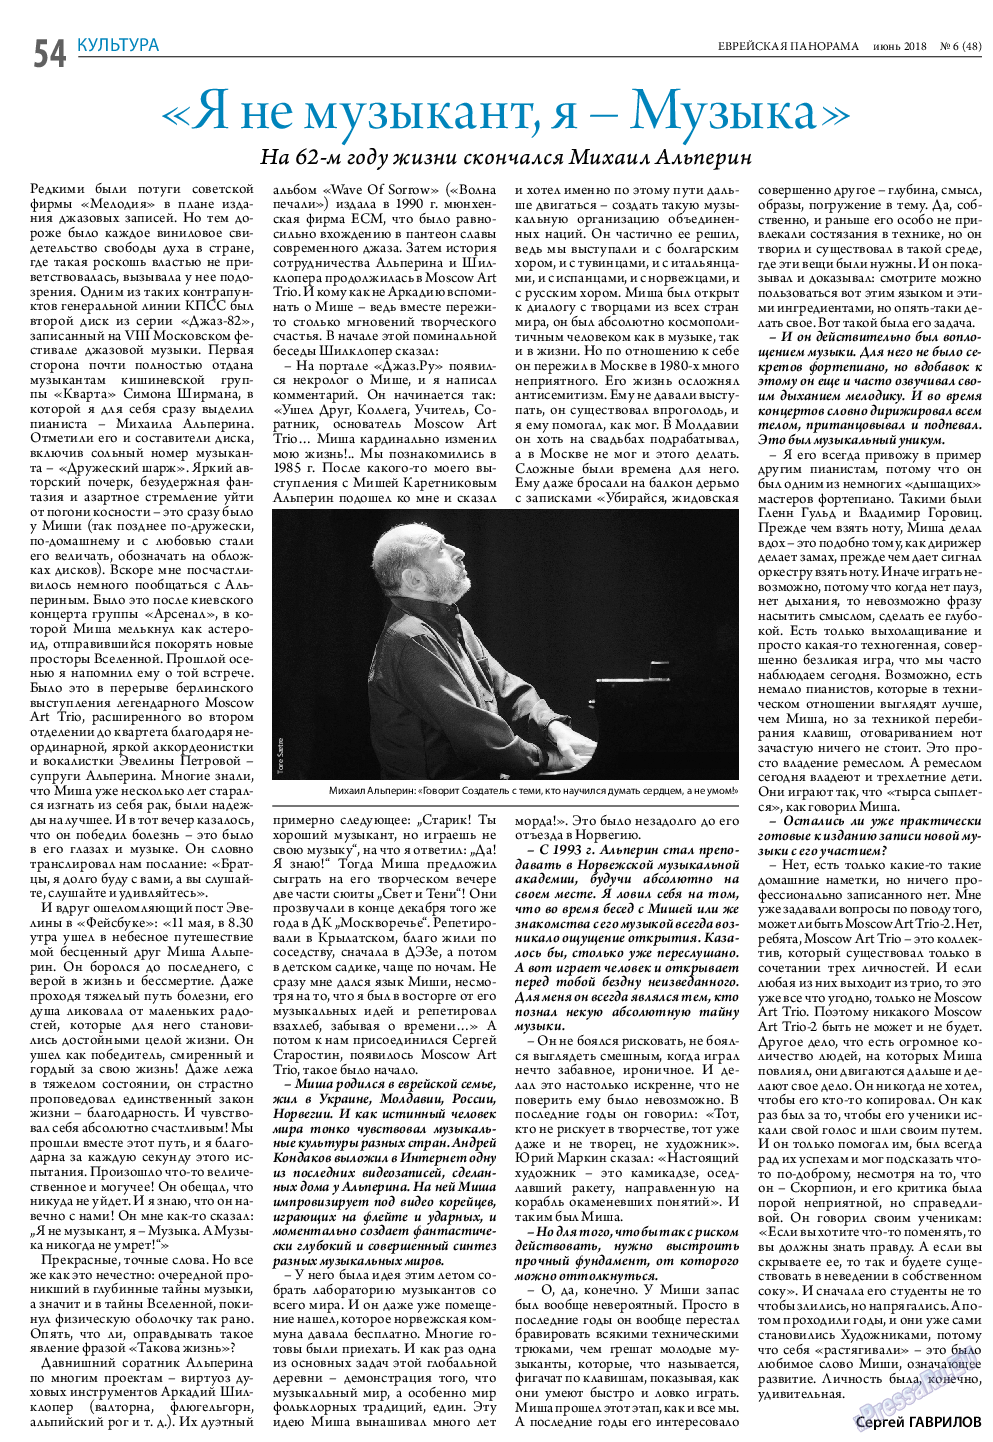 Еврейская панорама, газета. 2018 №6 стр.54